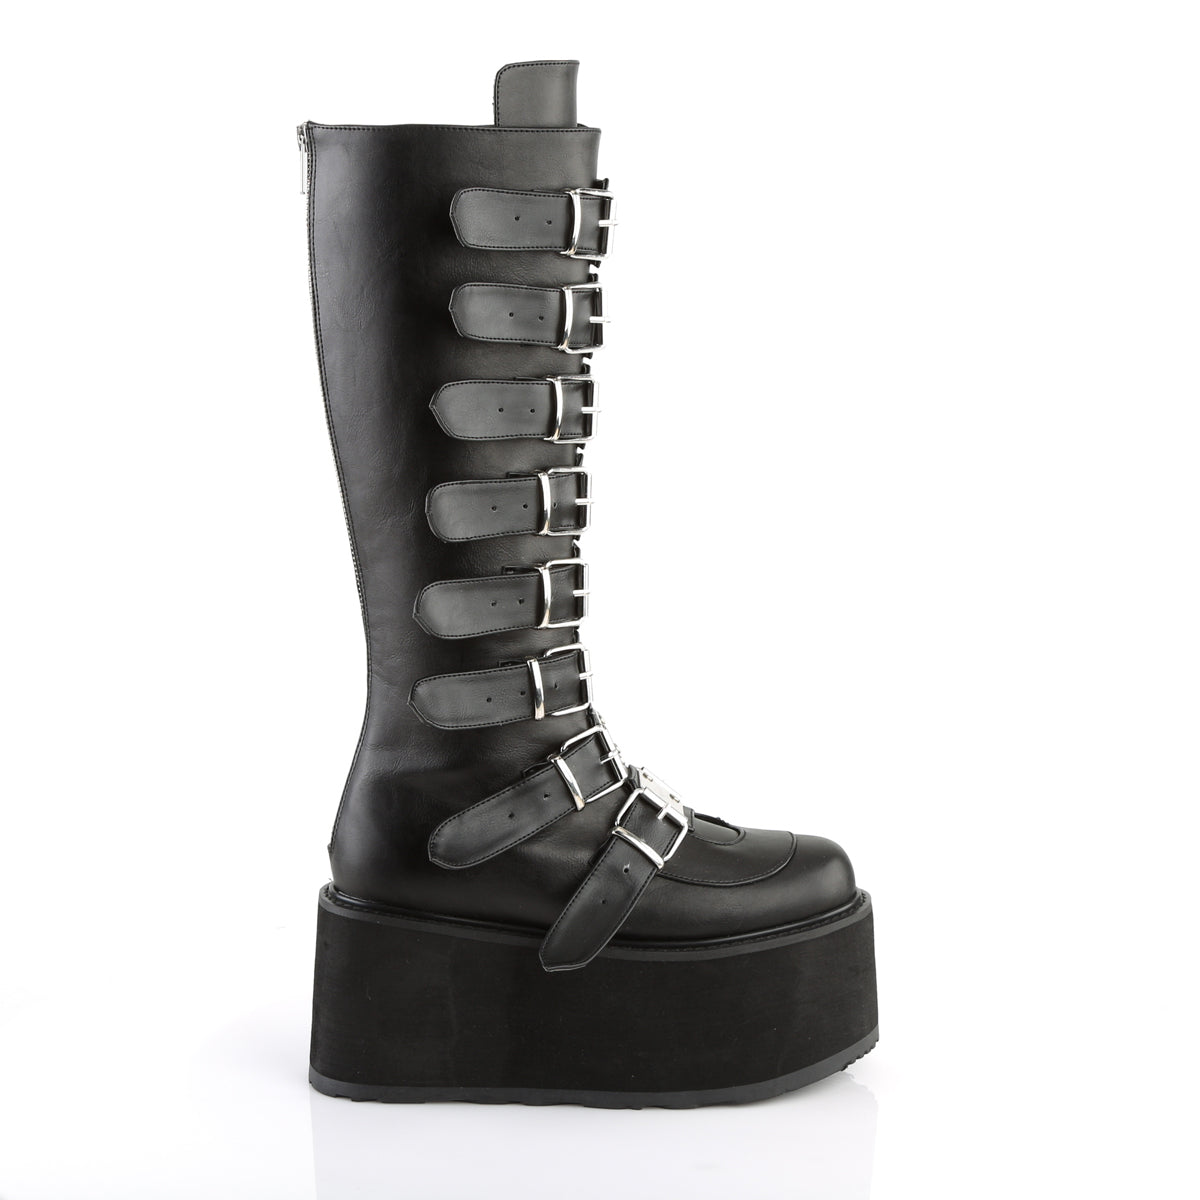 DAMNED-318 Demonia Black Vegan Leather Women's Mid-Calf & Knee High Boots [Demonia Cult Alternative Footwear]